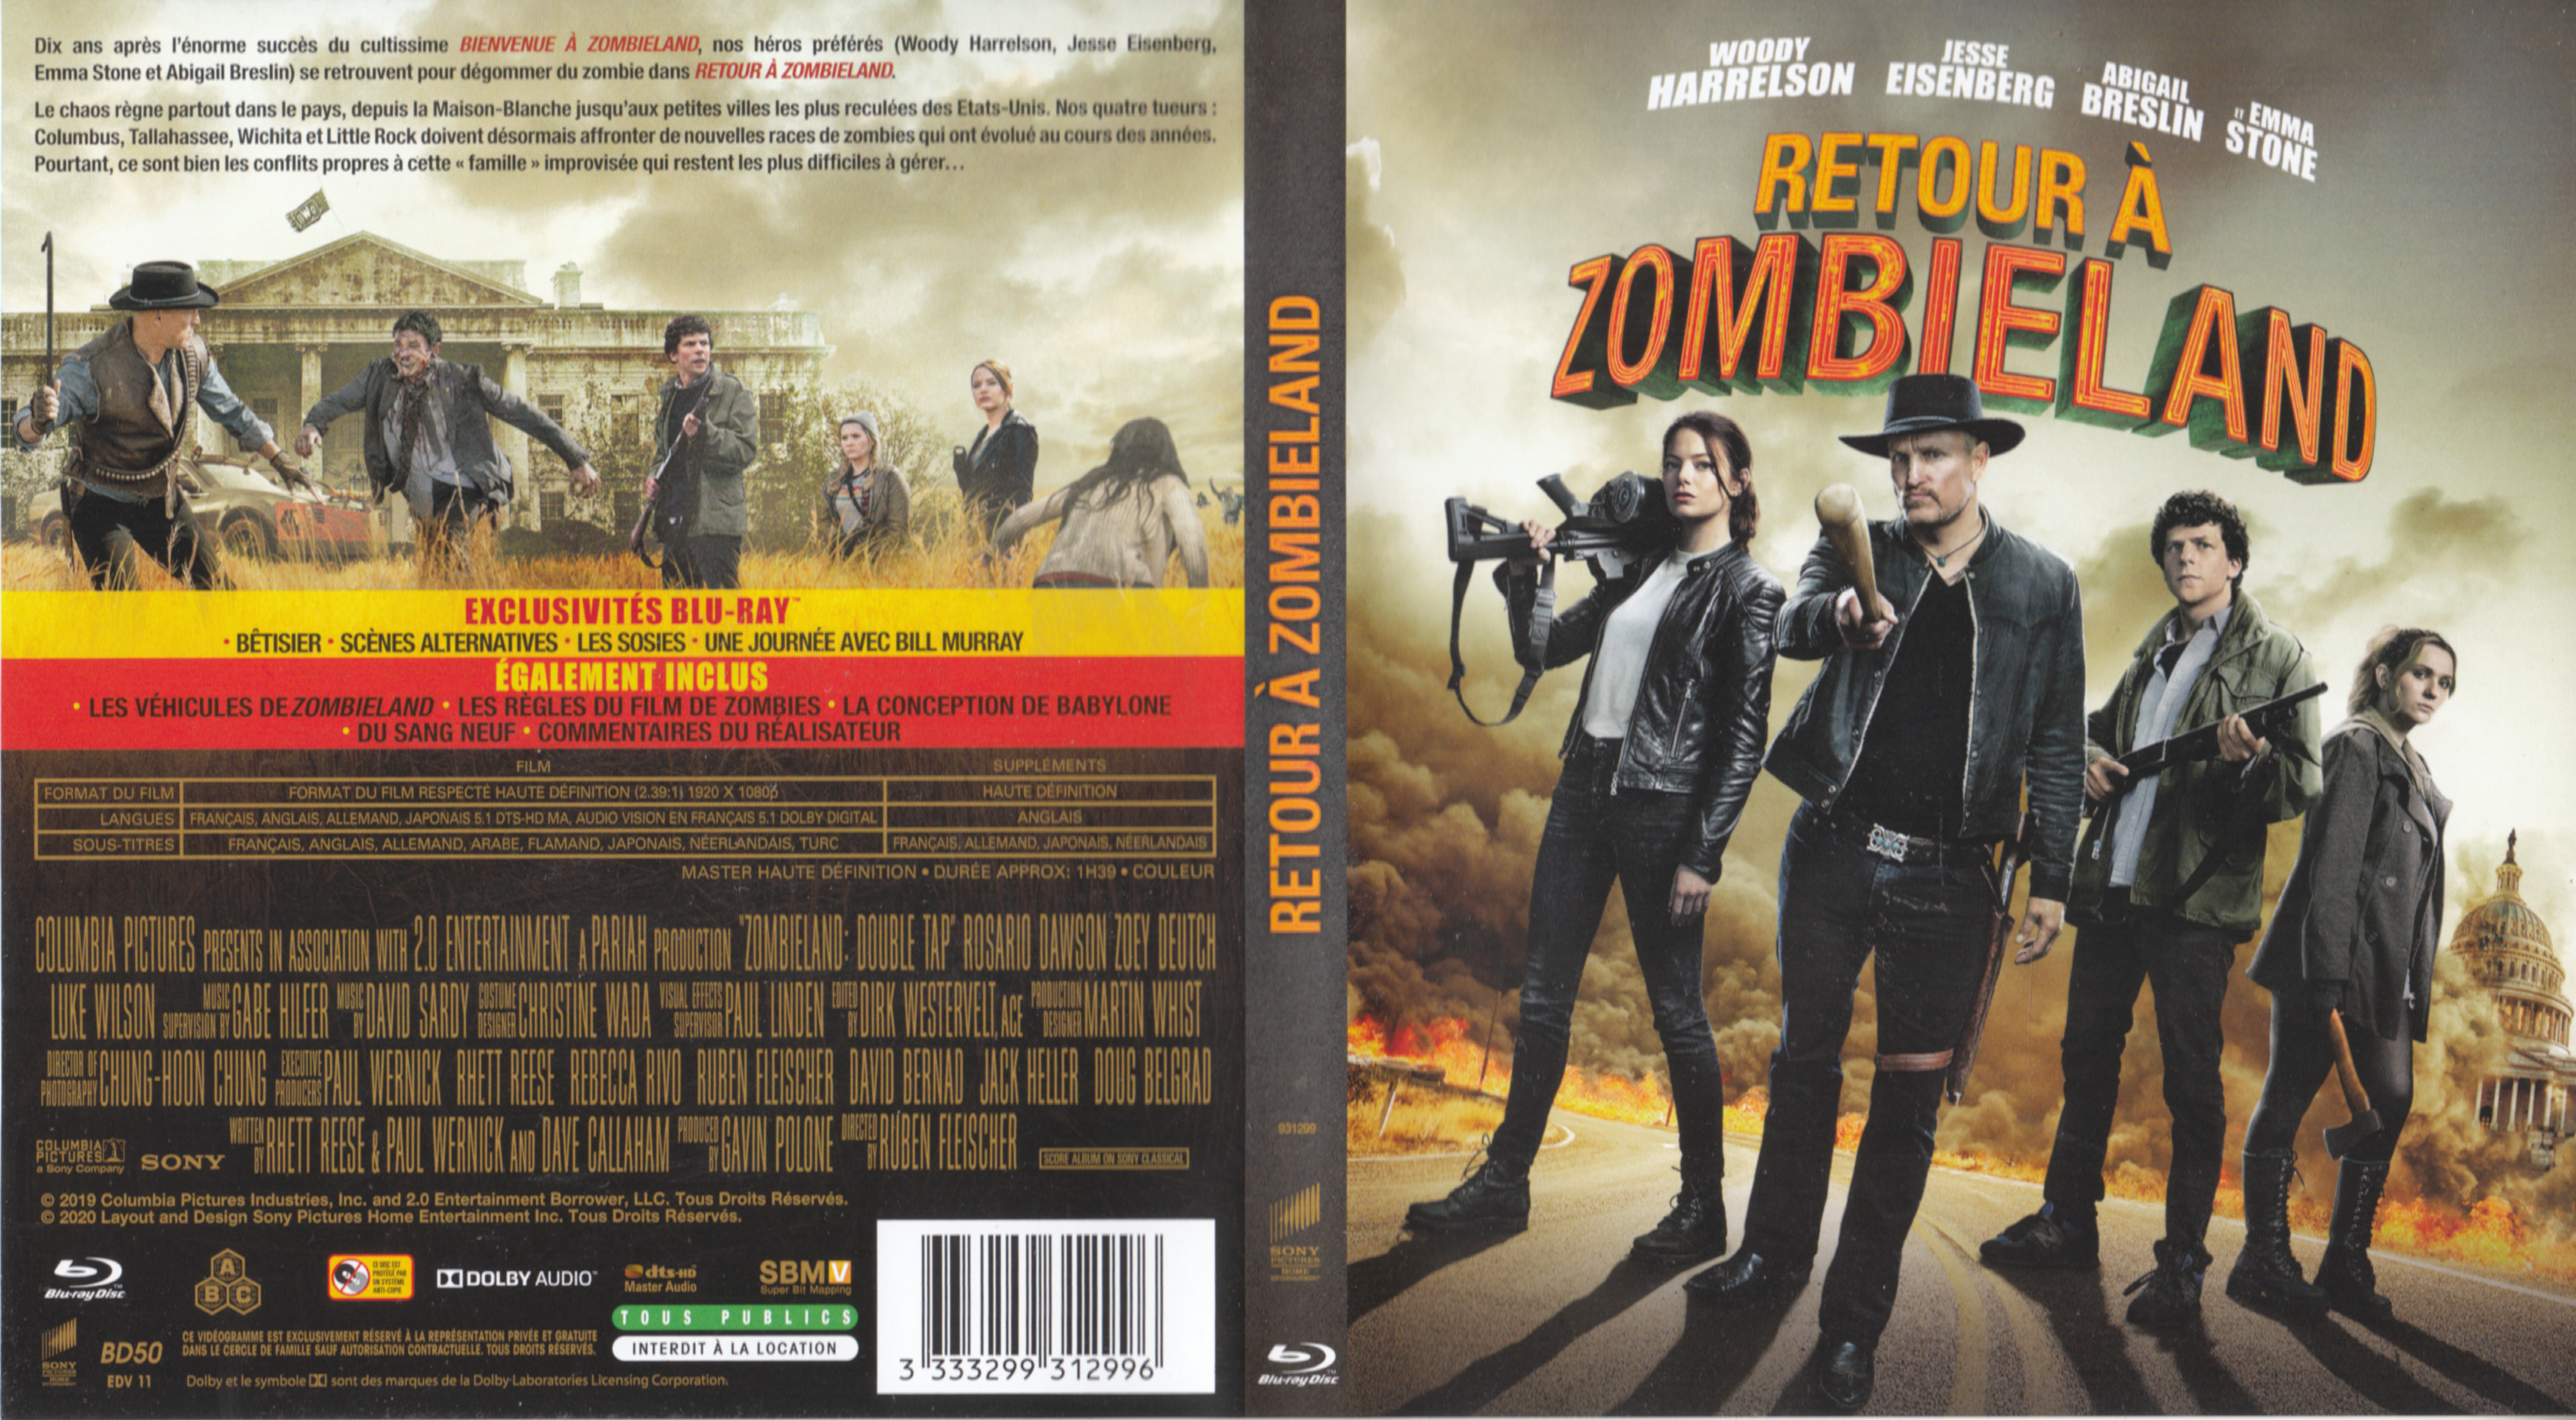 Jaquette DVD Retour a zombieland (BLU-RAY)